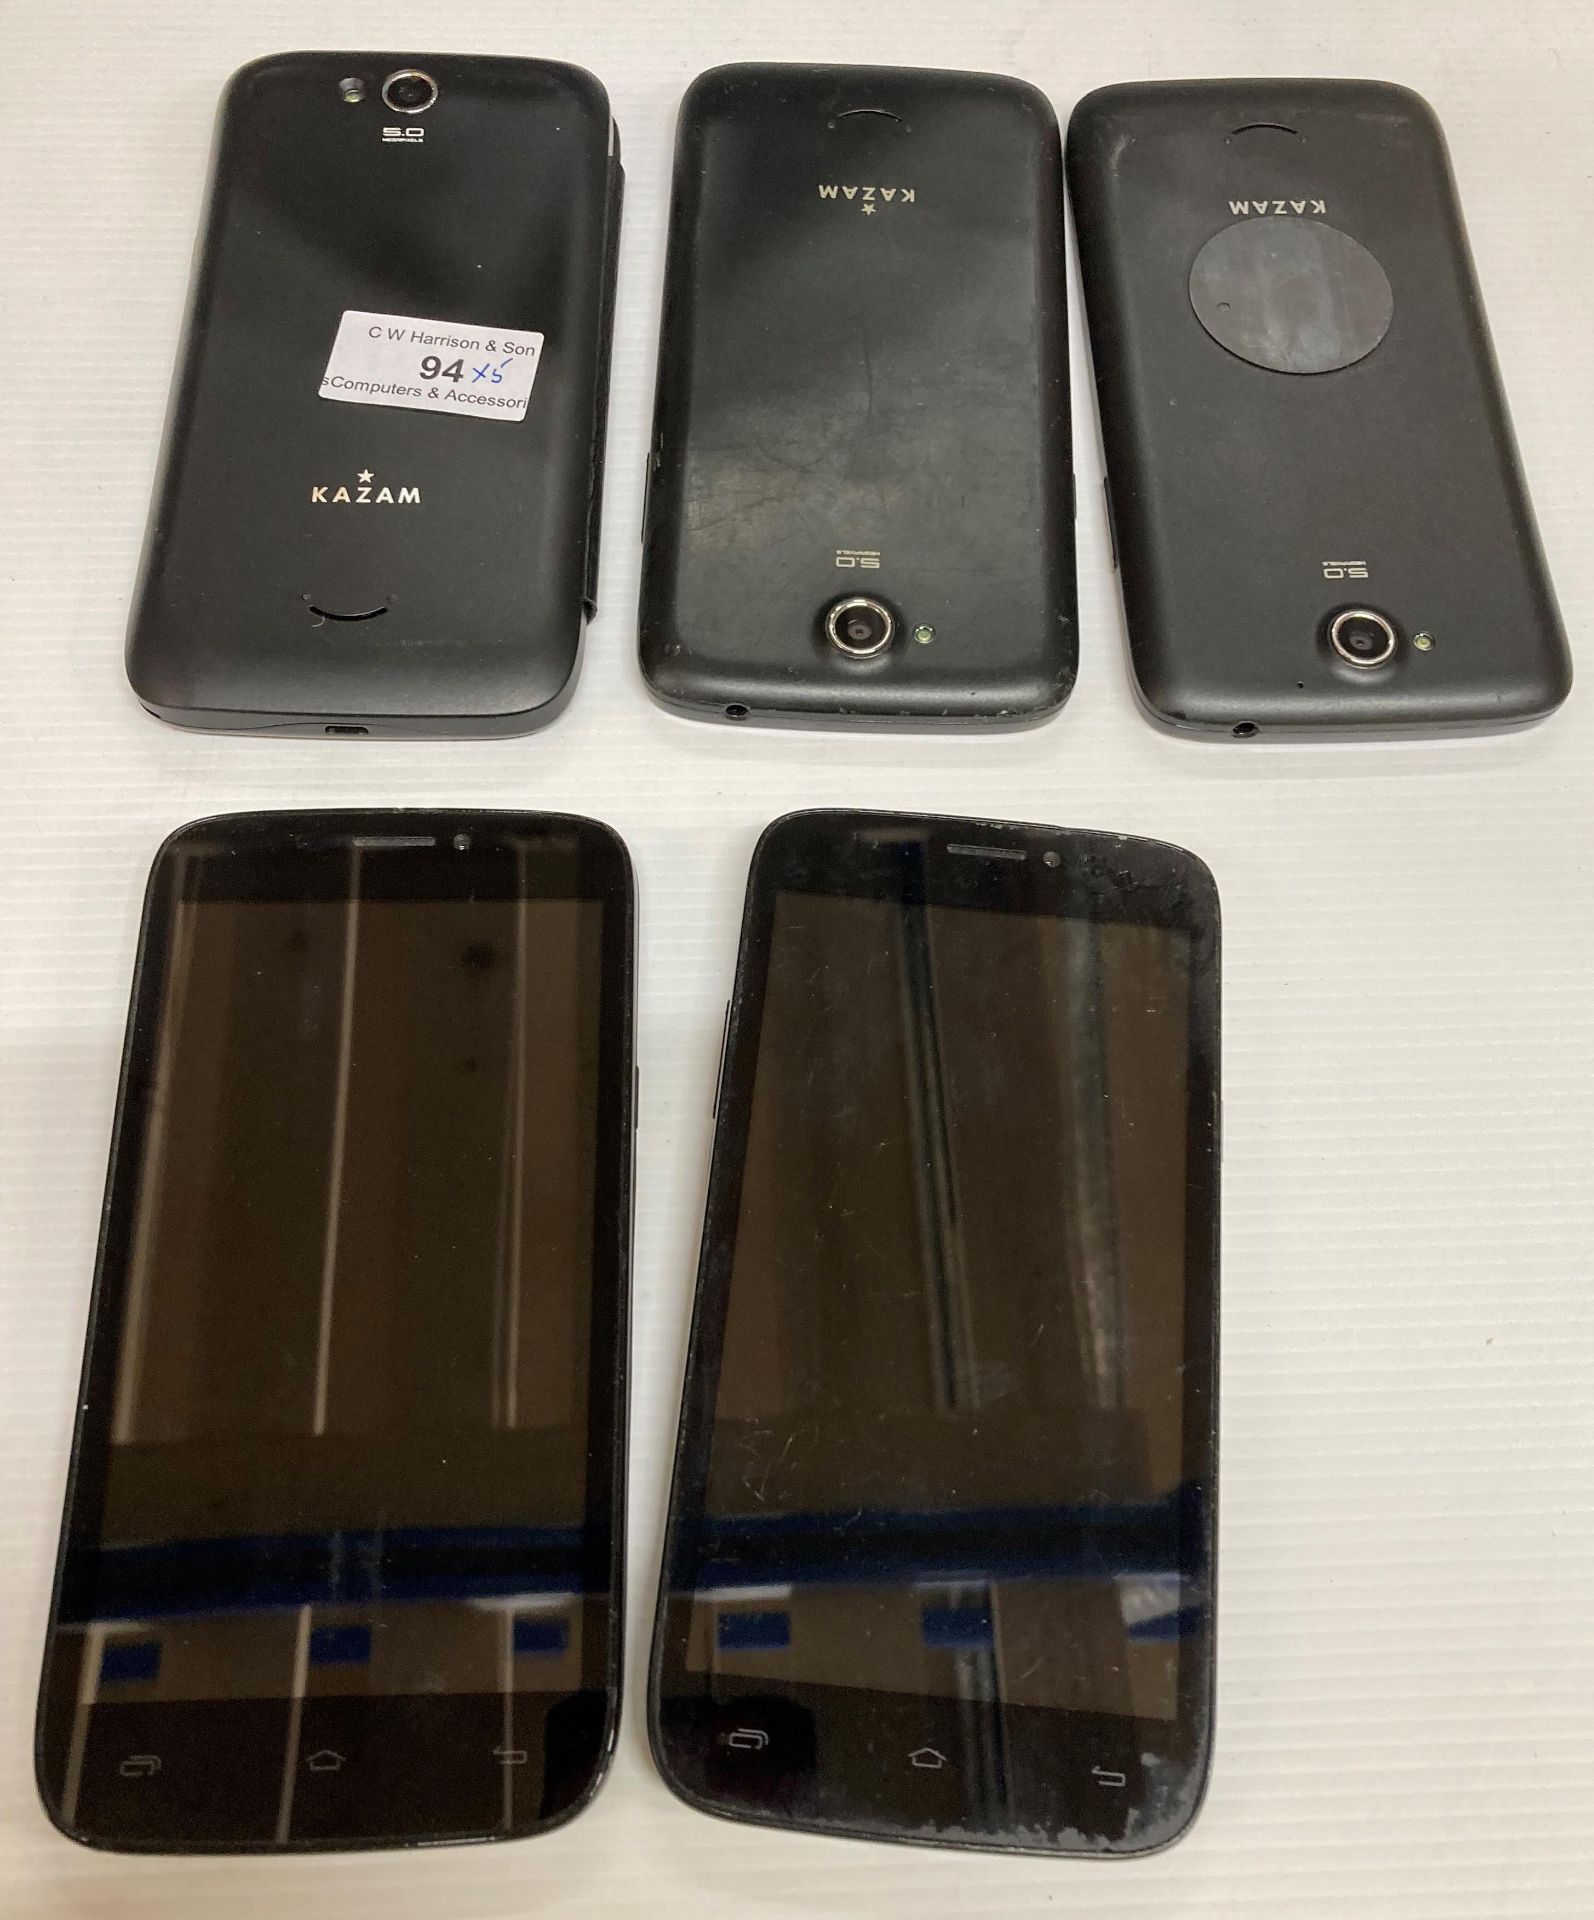 5 x Kazam 5MP Mobile Phones no chargers (Saleroom location: G11)